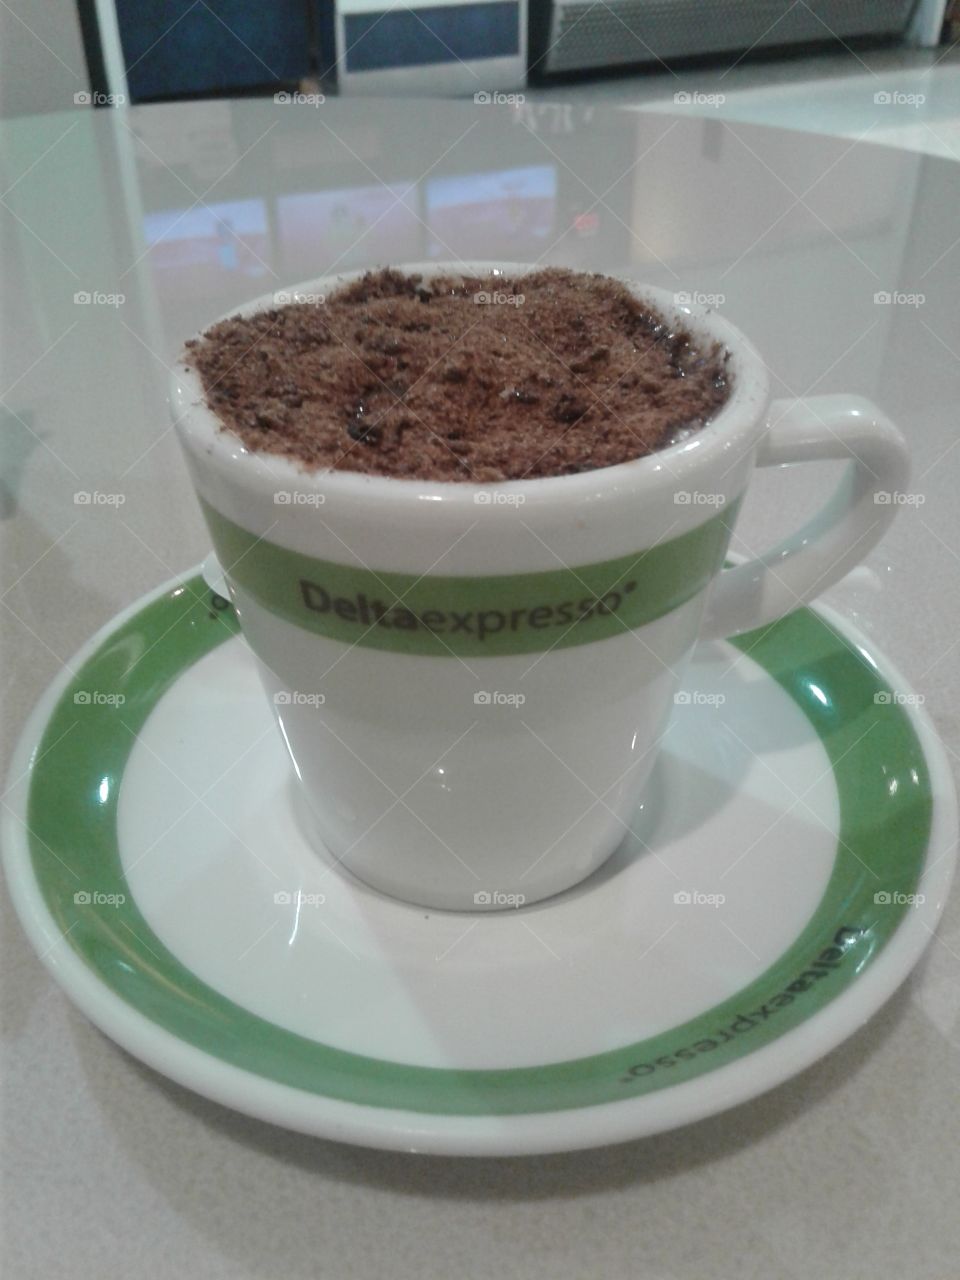 some cappuccino